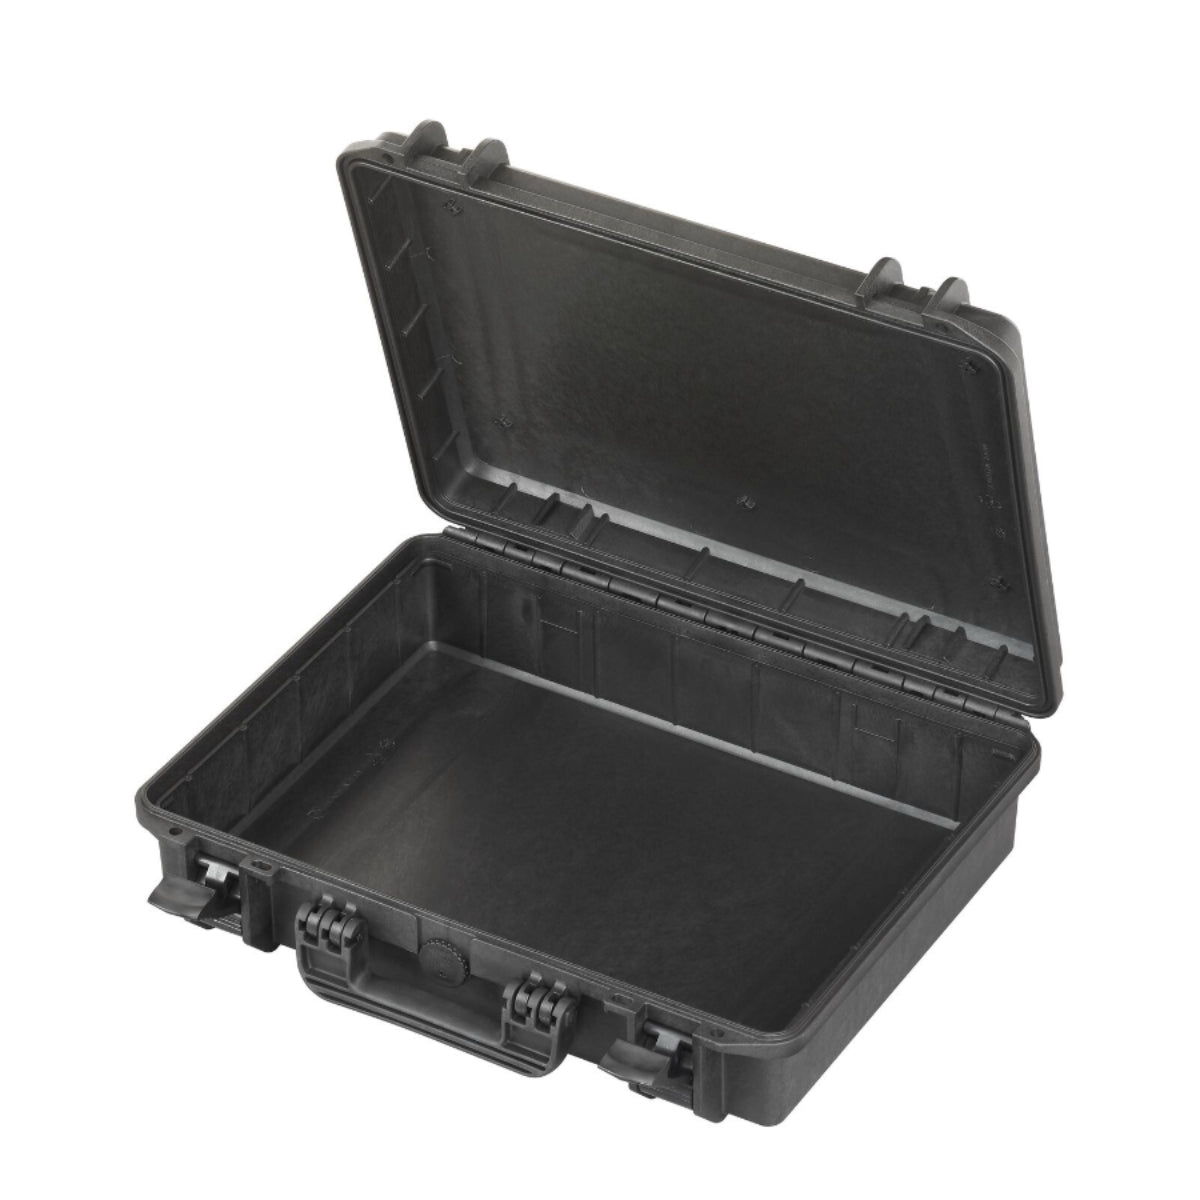 SP PRO 465H125 Black Carry Case, Empty w/ Convoluted Foam in Lid, ID: L465xW335xH125mm